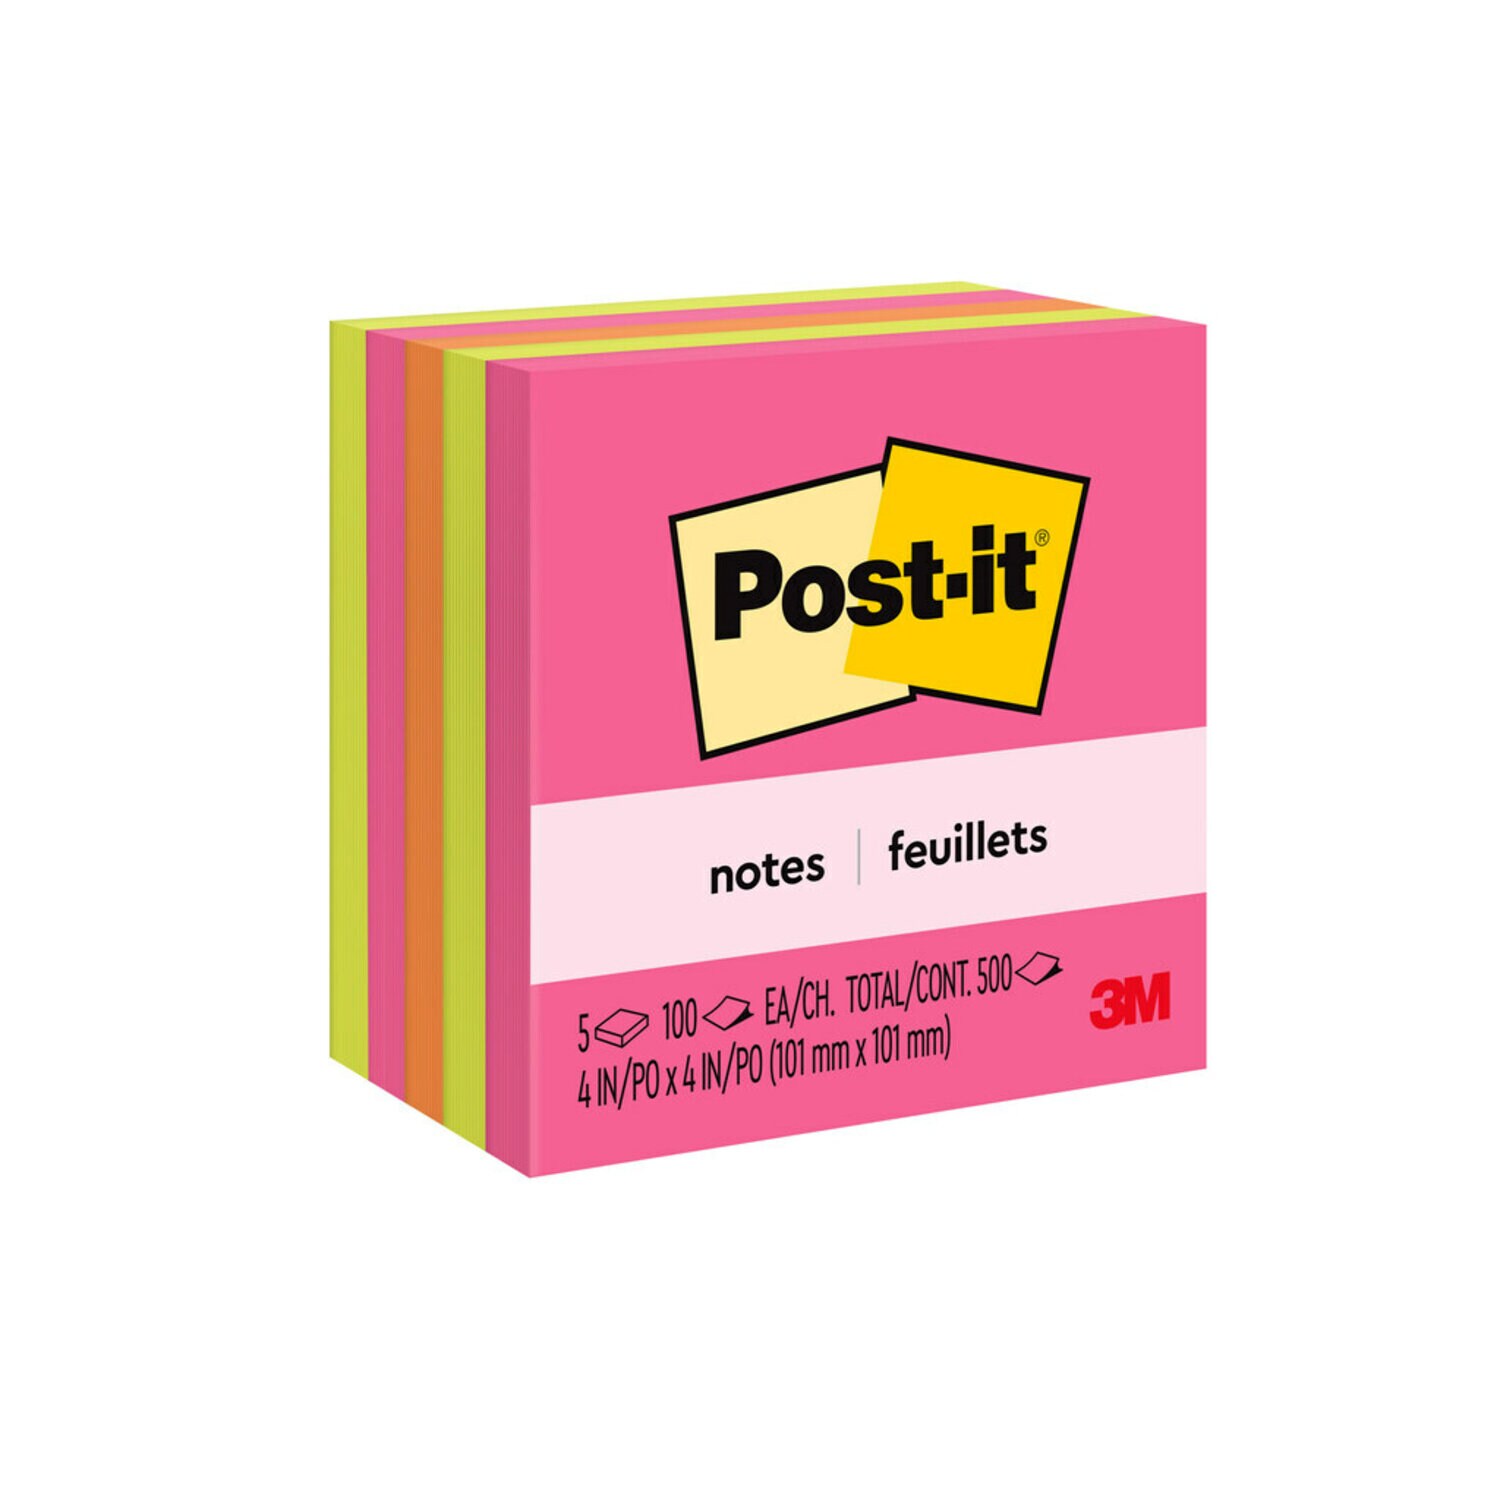 7100208037 - Post-it Notes 675-5LAN, 4 In X 4 In (101 mm X 101 mm)